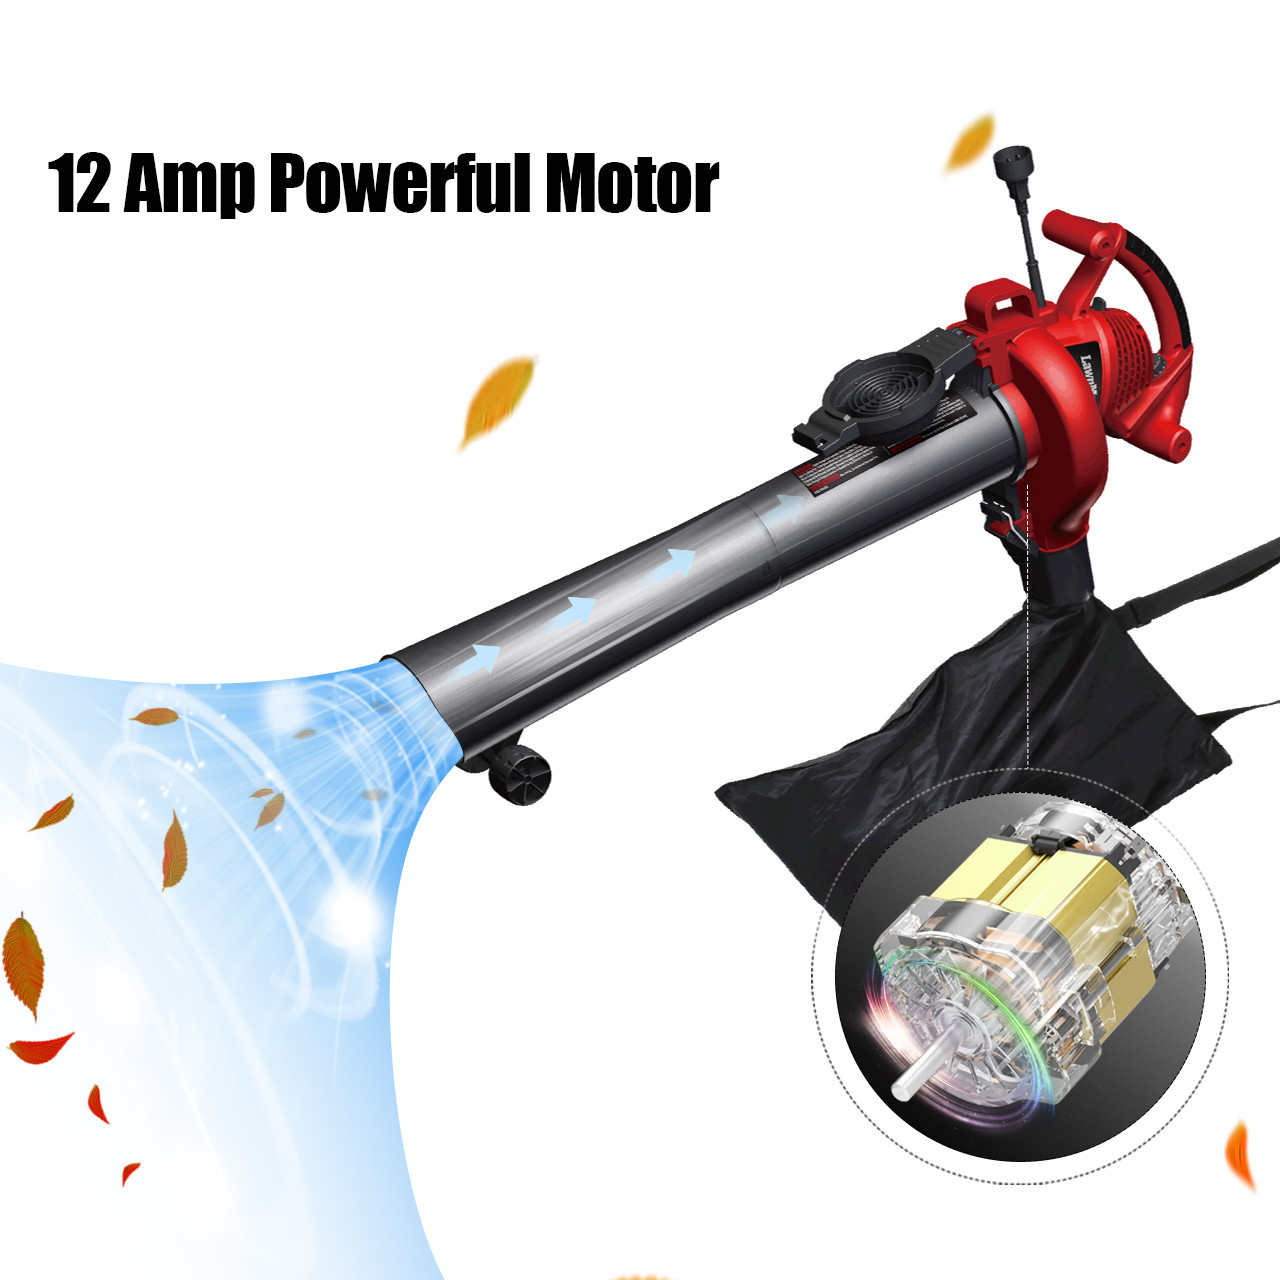 WG507 12 Amp 2-Speed Electric Blower/Vac/Mulcher